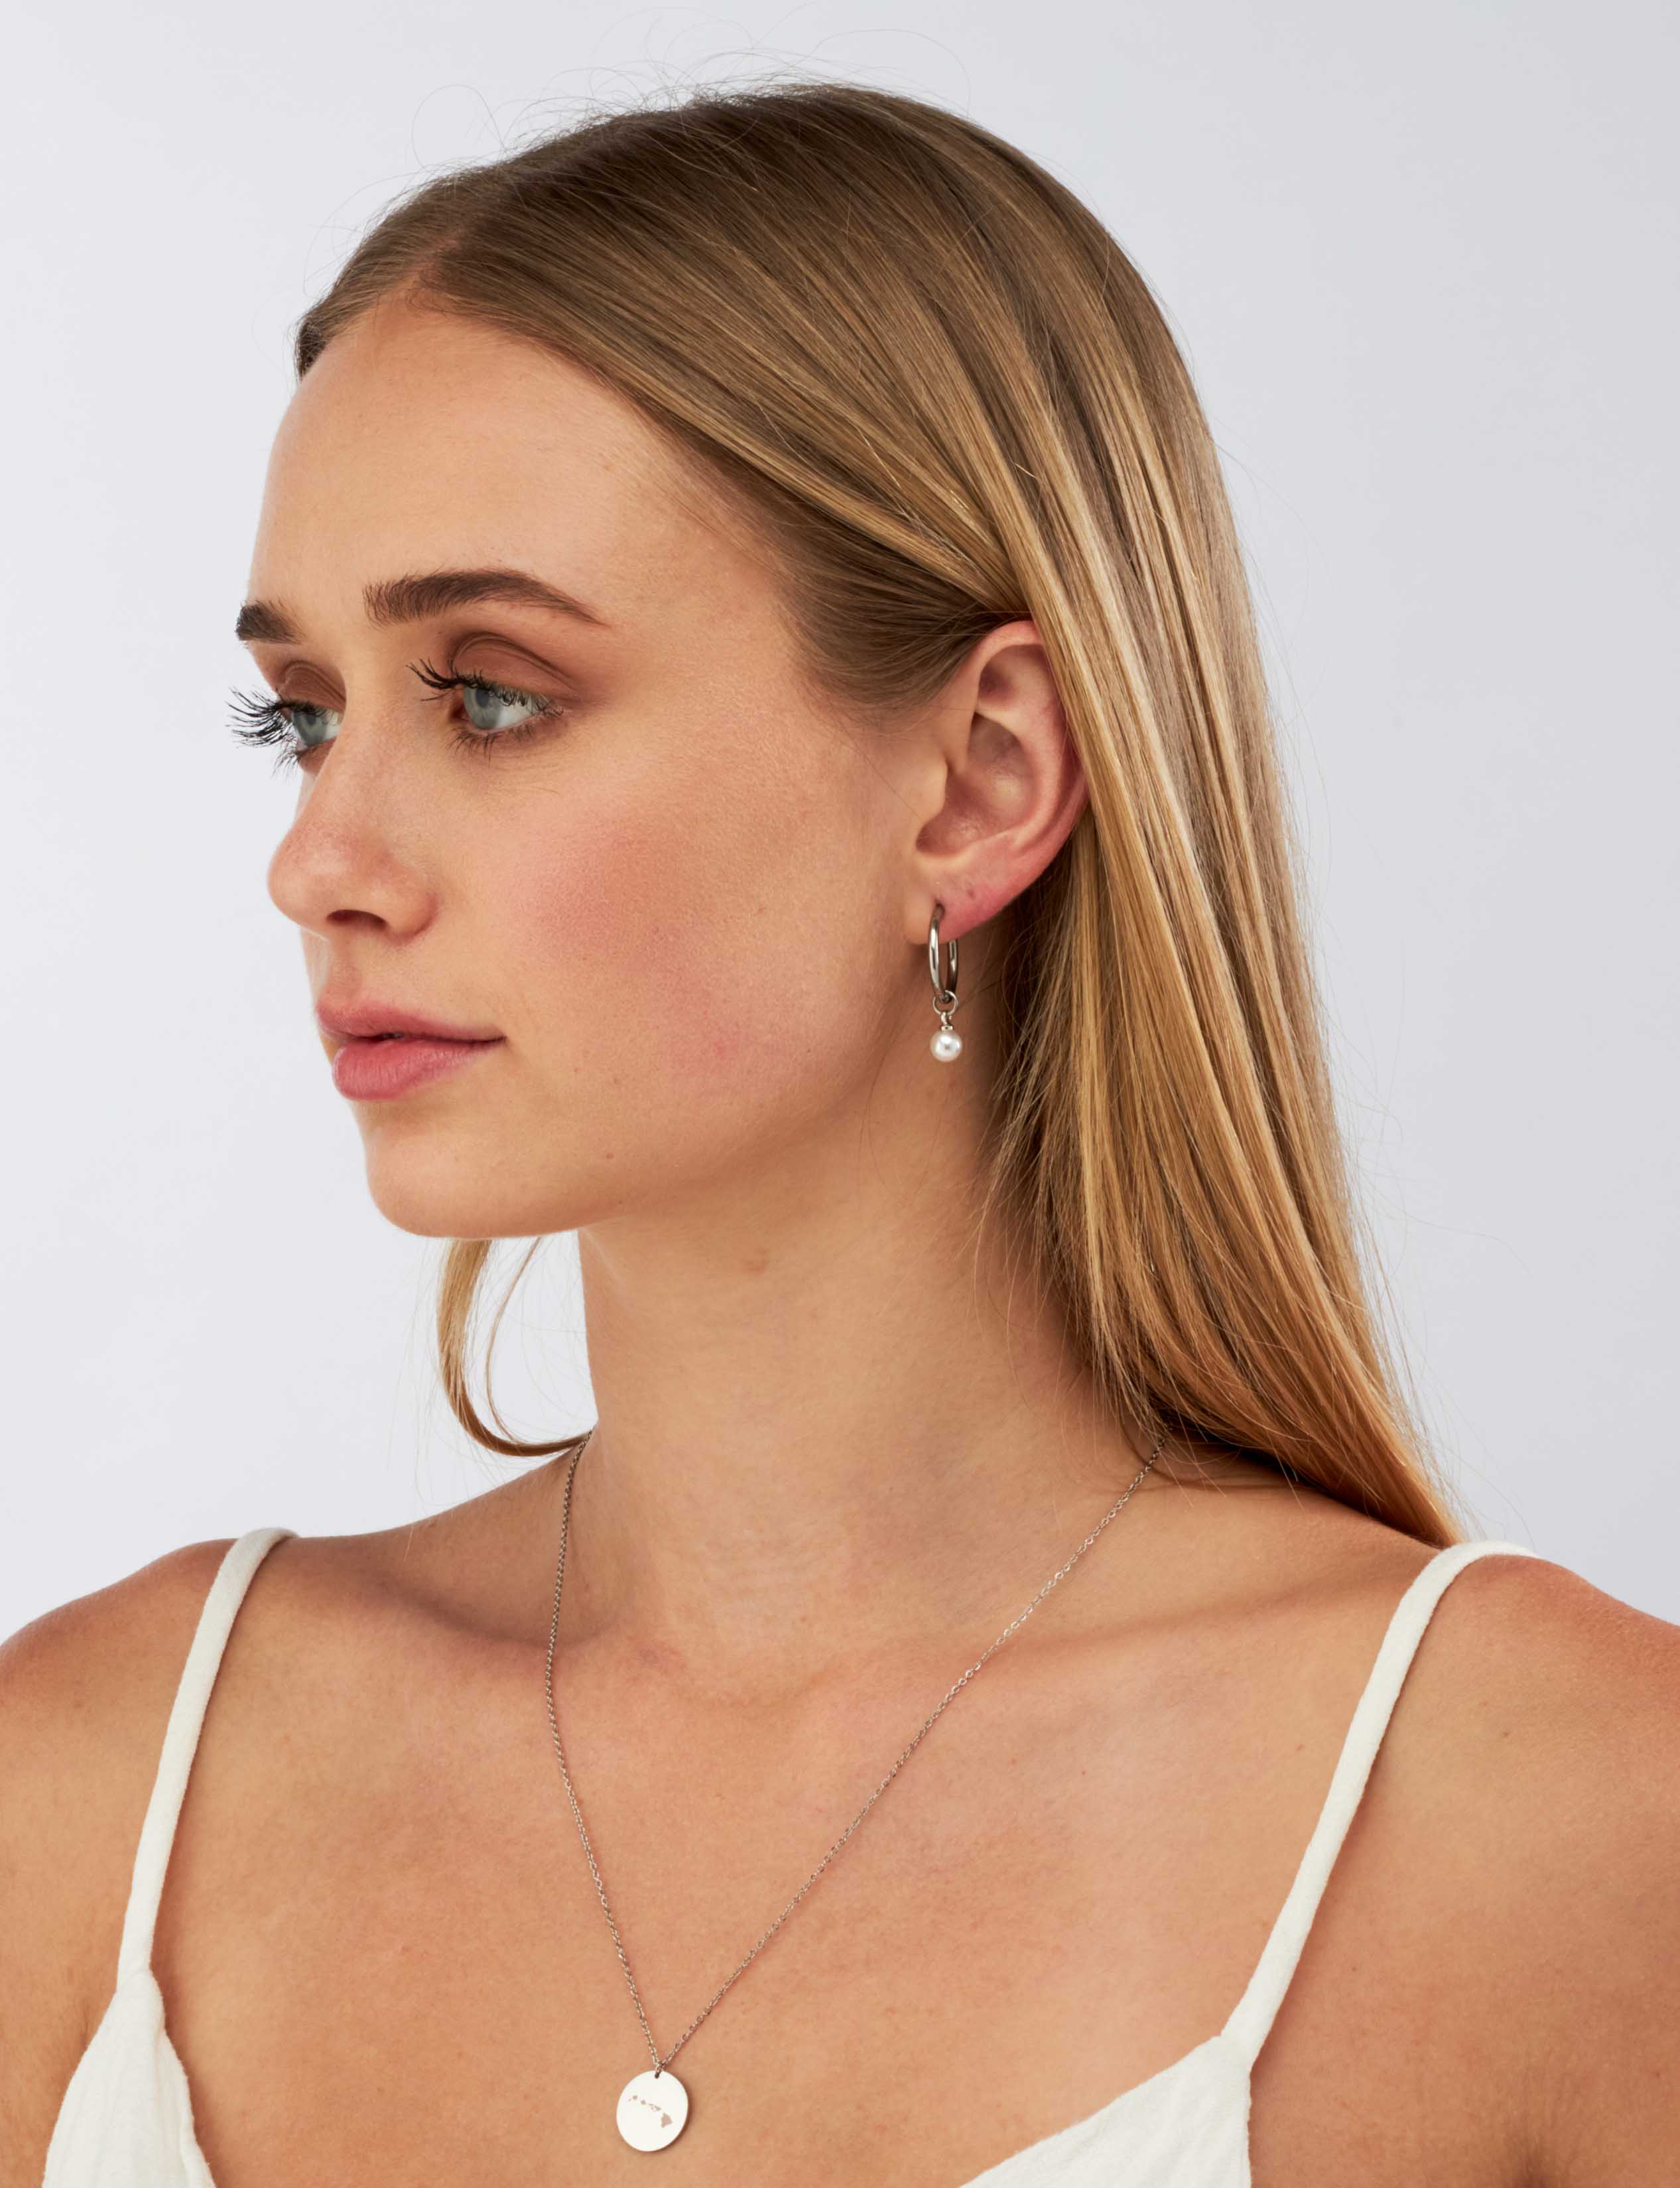 Pearl Hoops - Silver Earrings - Ocean Wave Jewelry